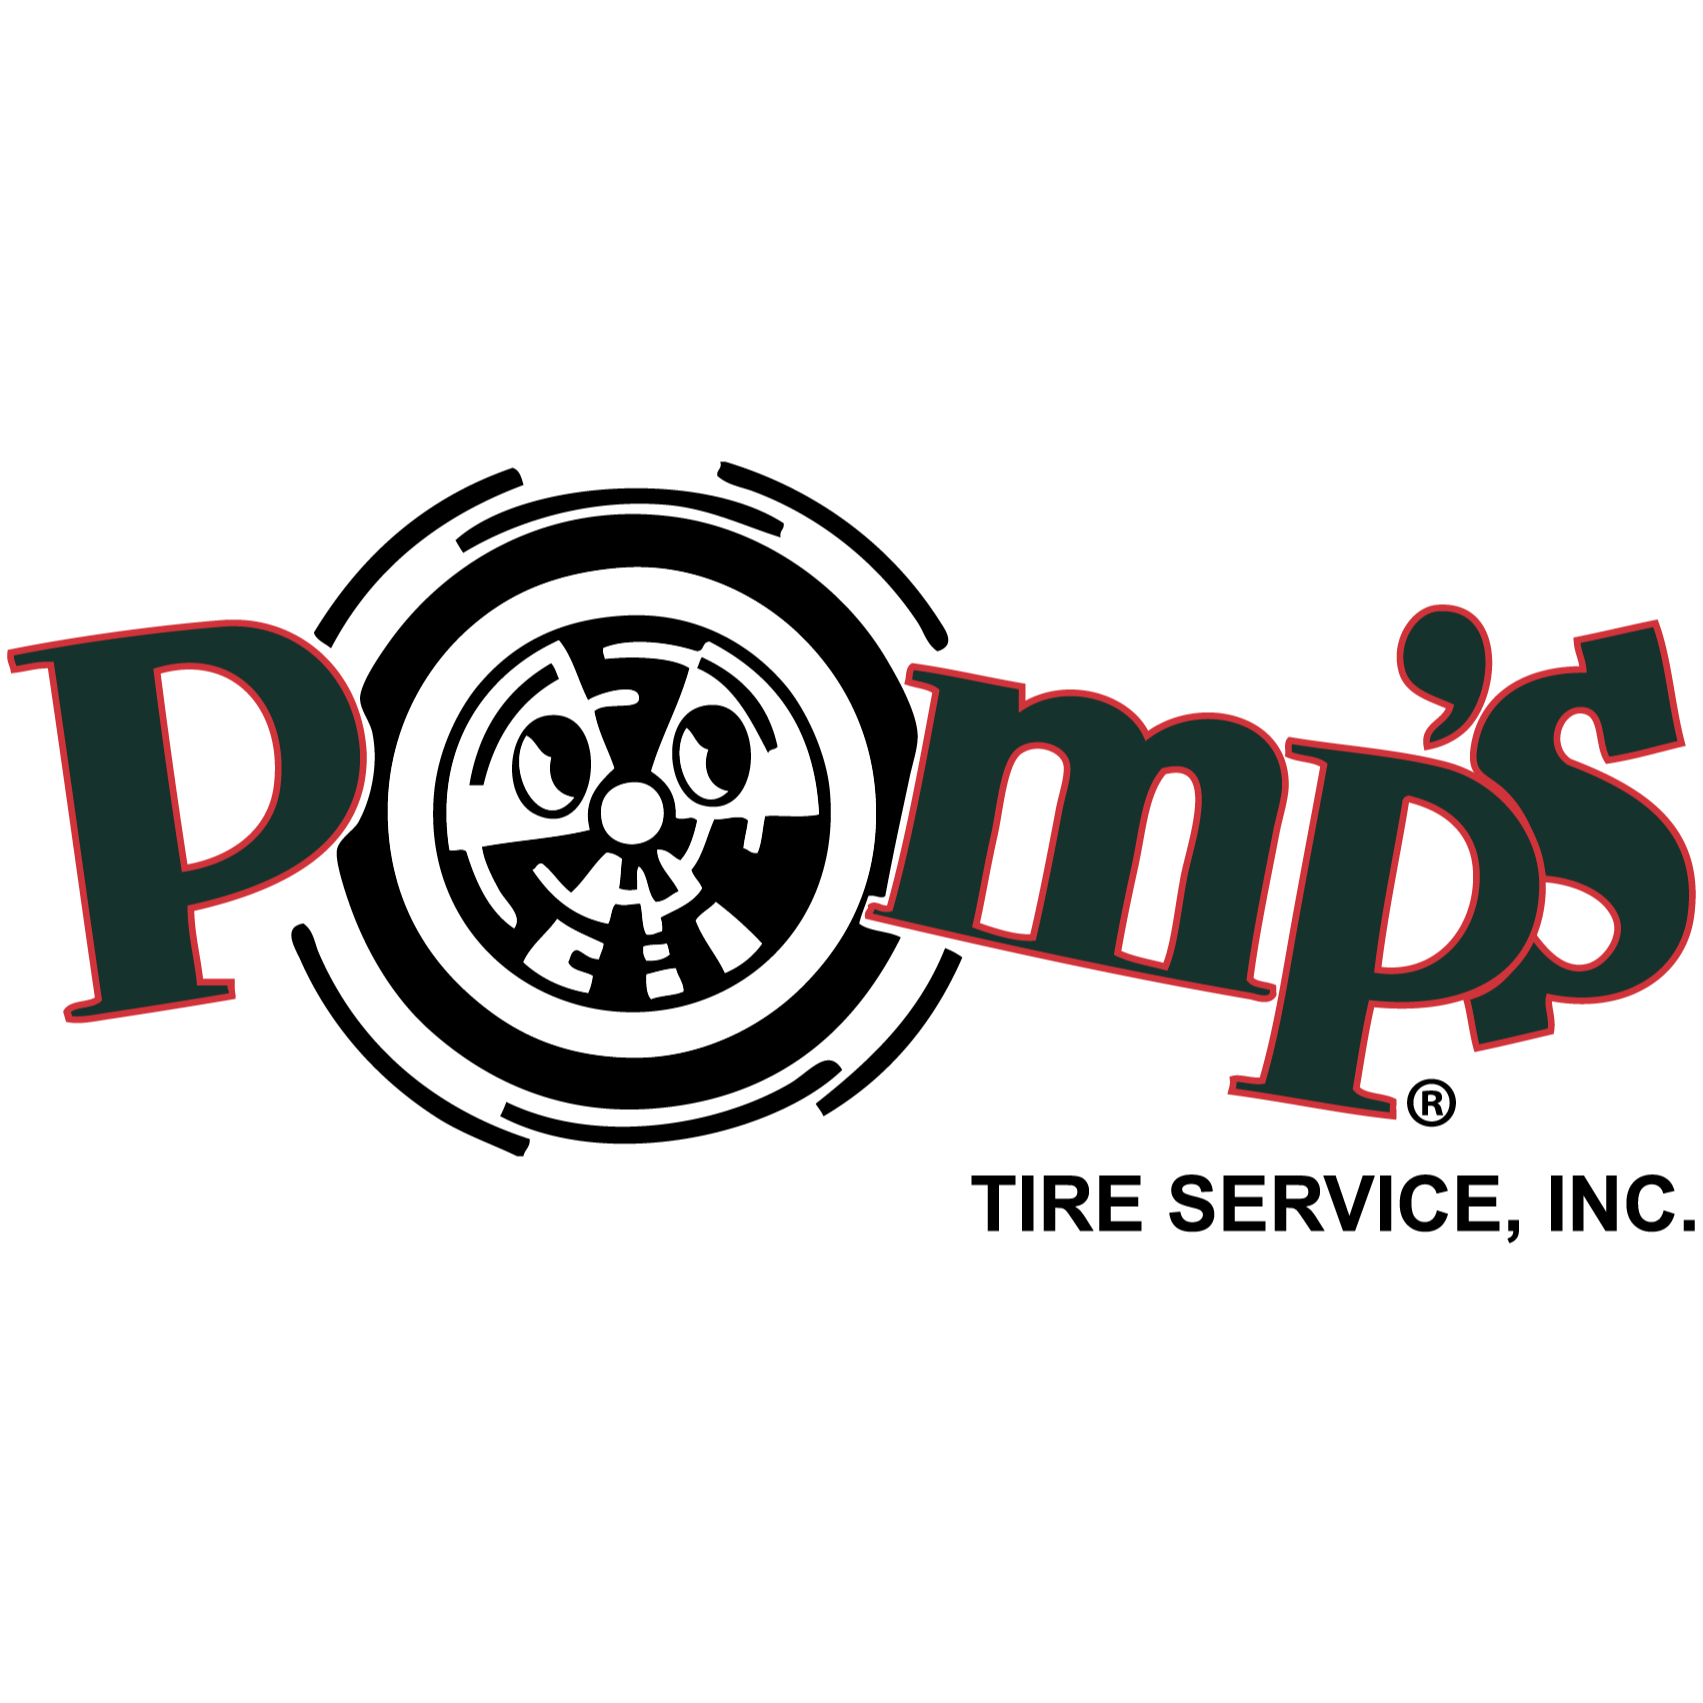 Pomp's Tire Service - Appleton, WI 54915 - (920)831-9950 | ShowMeLocal.com